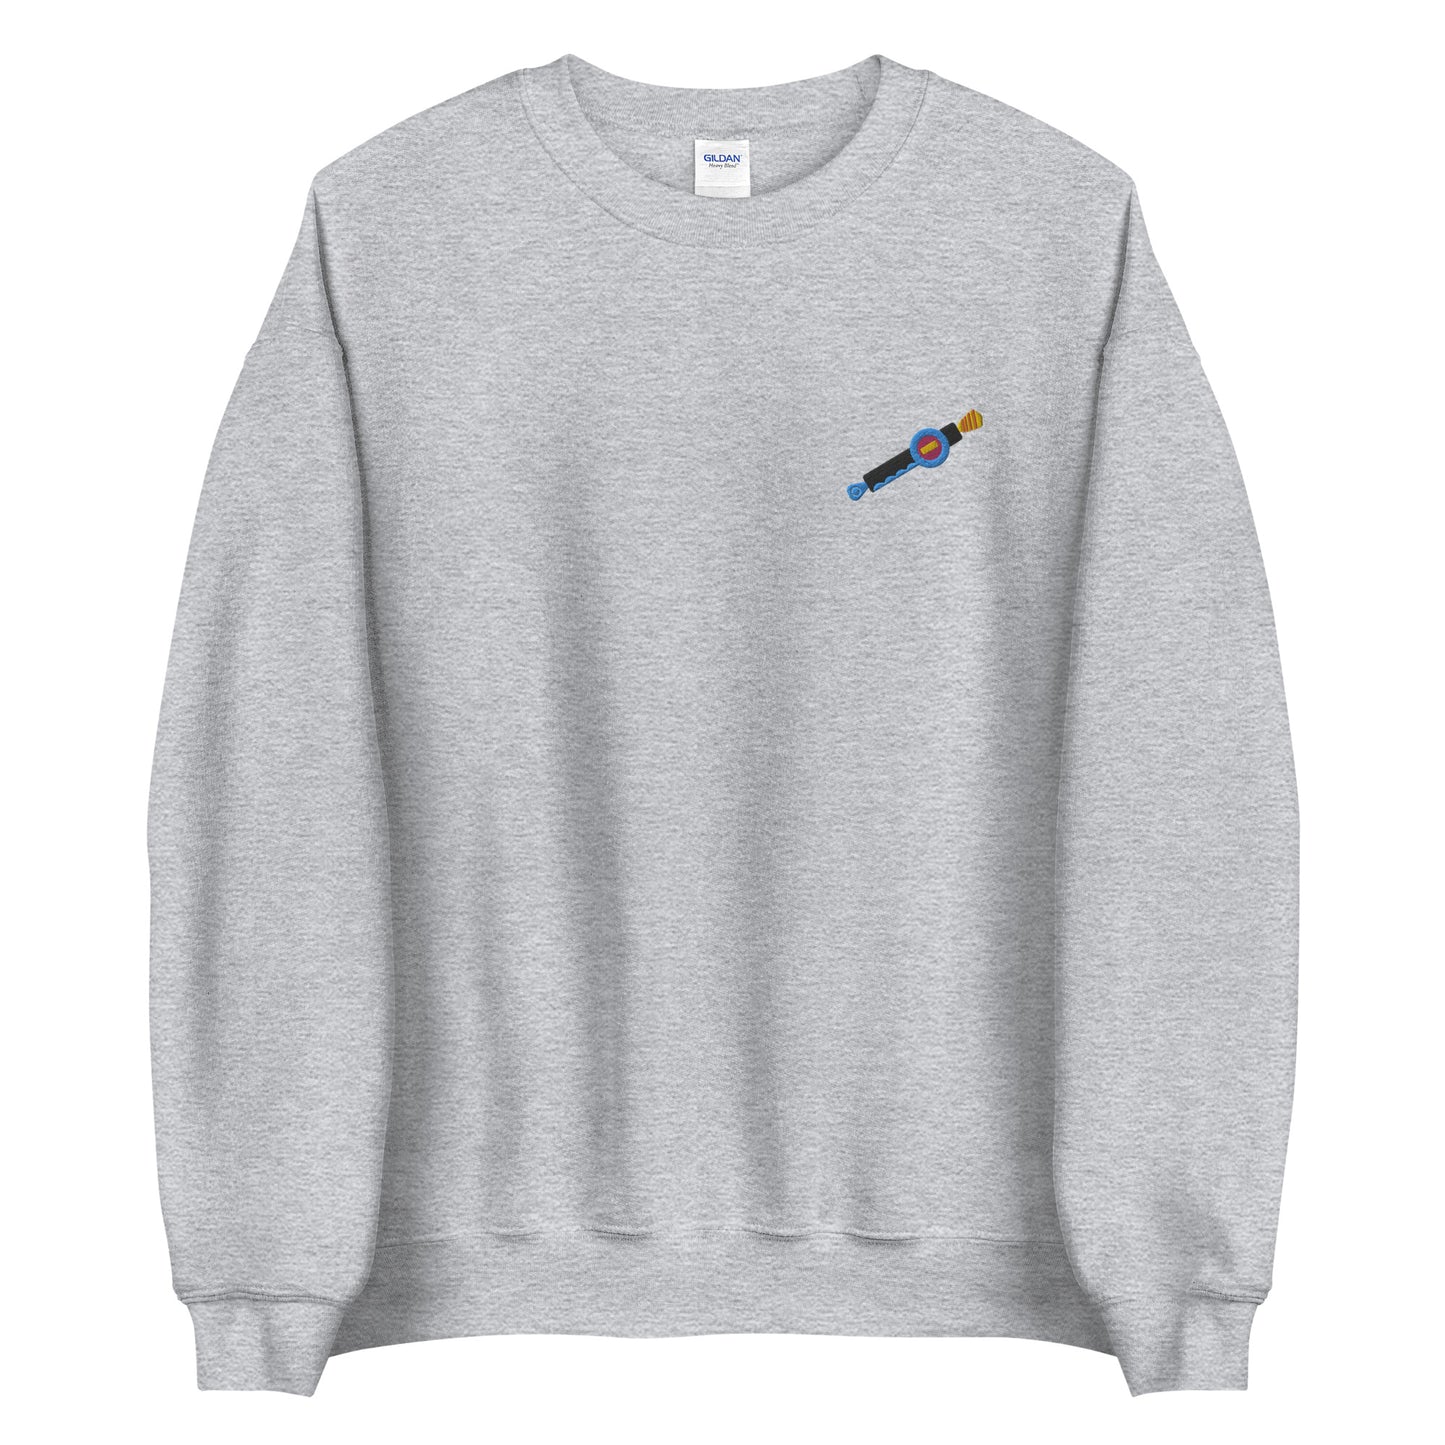 Bop This embroidered crewneck sweatshirt